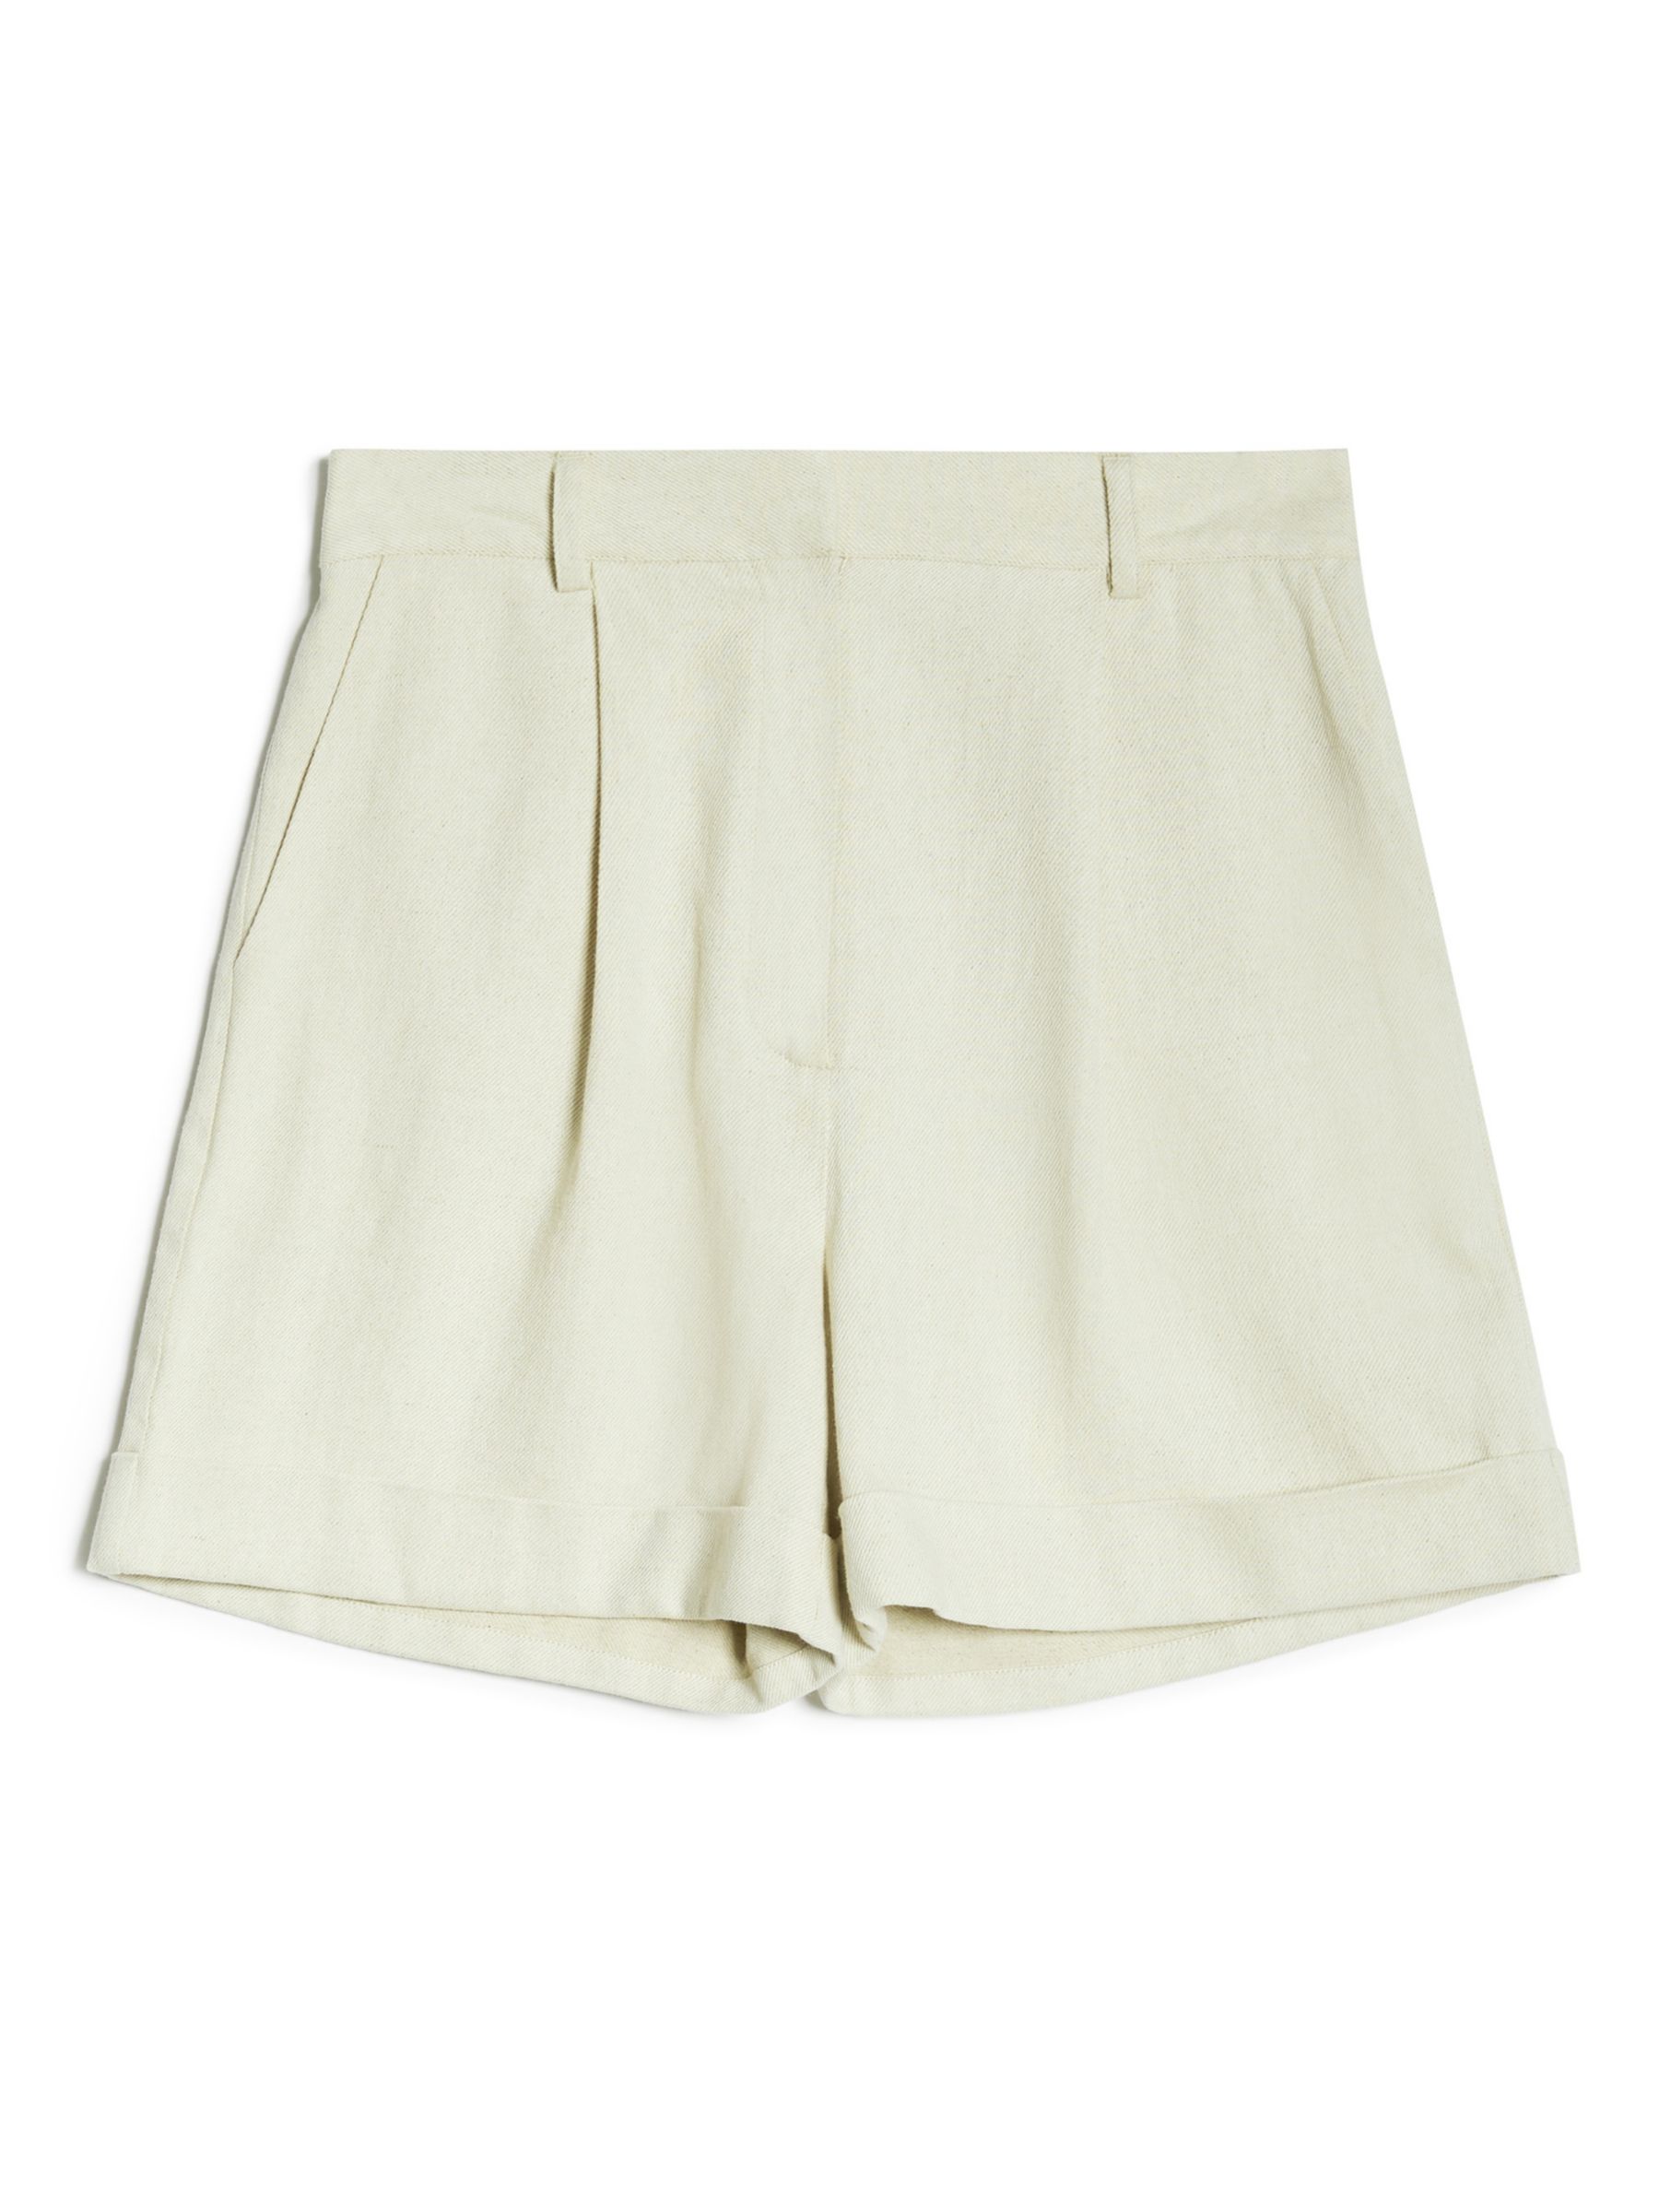 Albaray Cotton Linen Blend Twill Shorts, Sand, 8